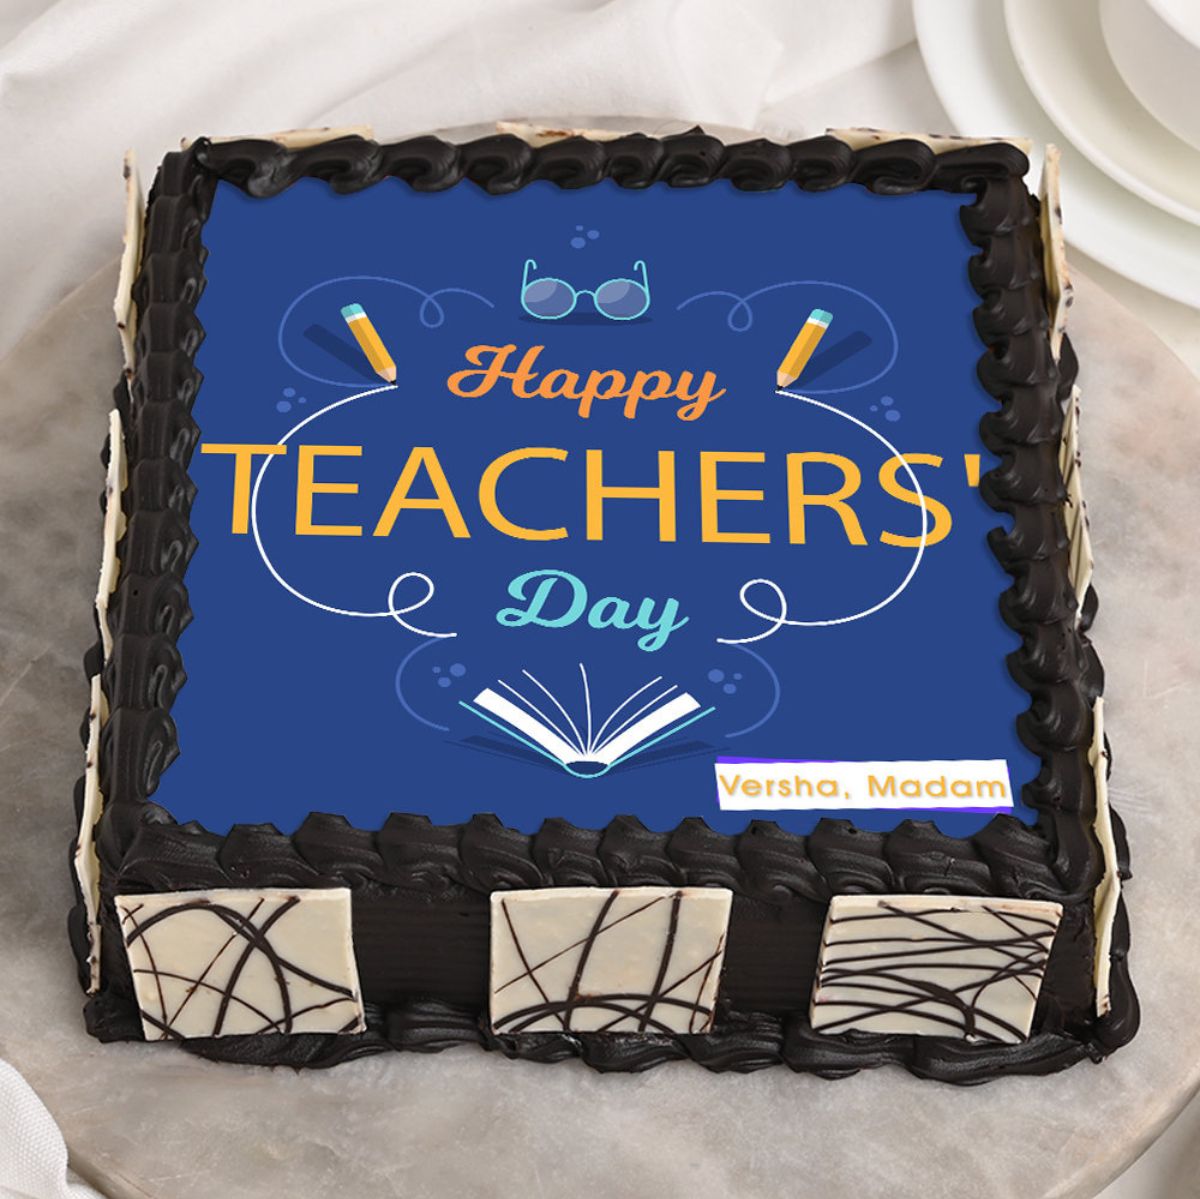 Happy Teacher's Day Poster Cake